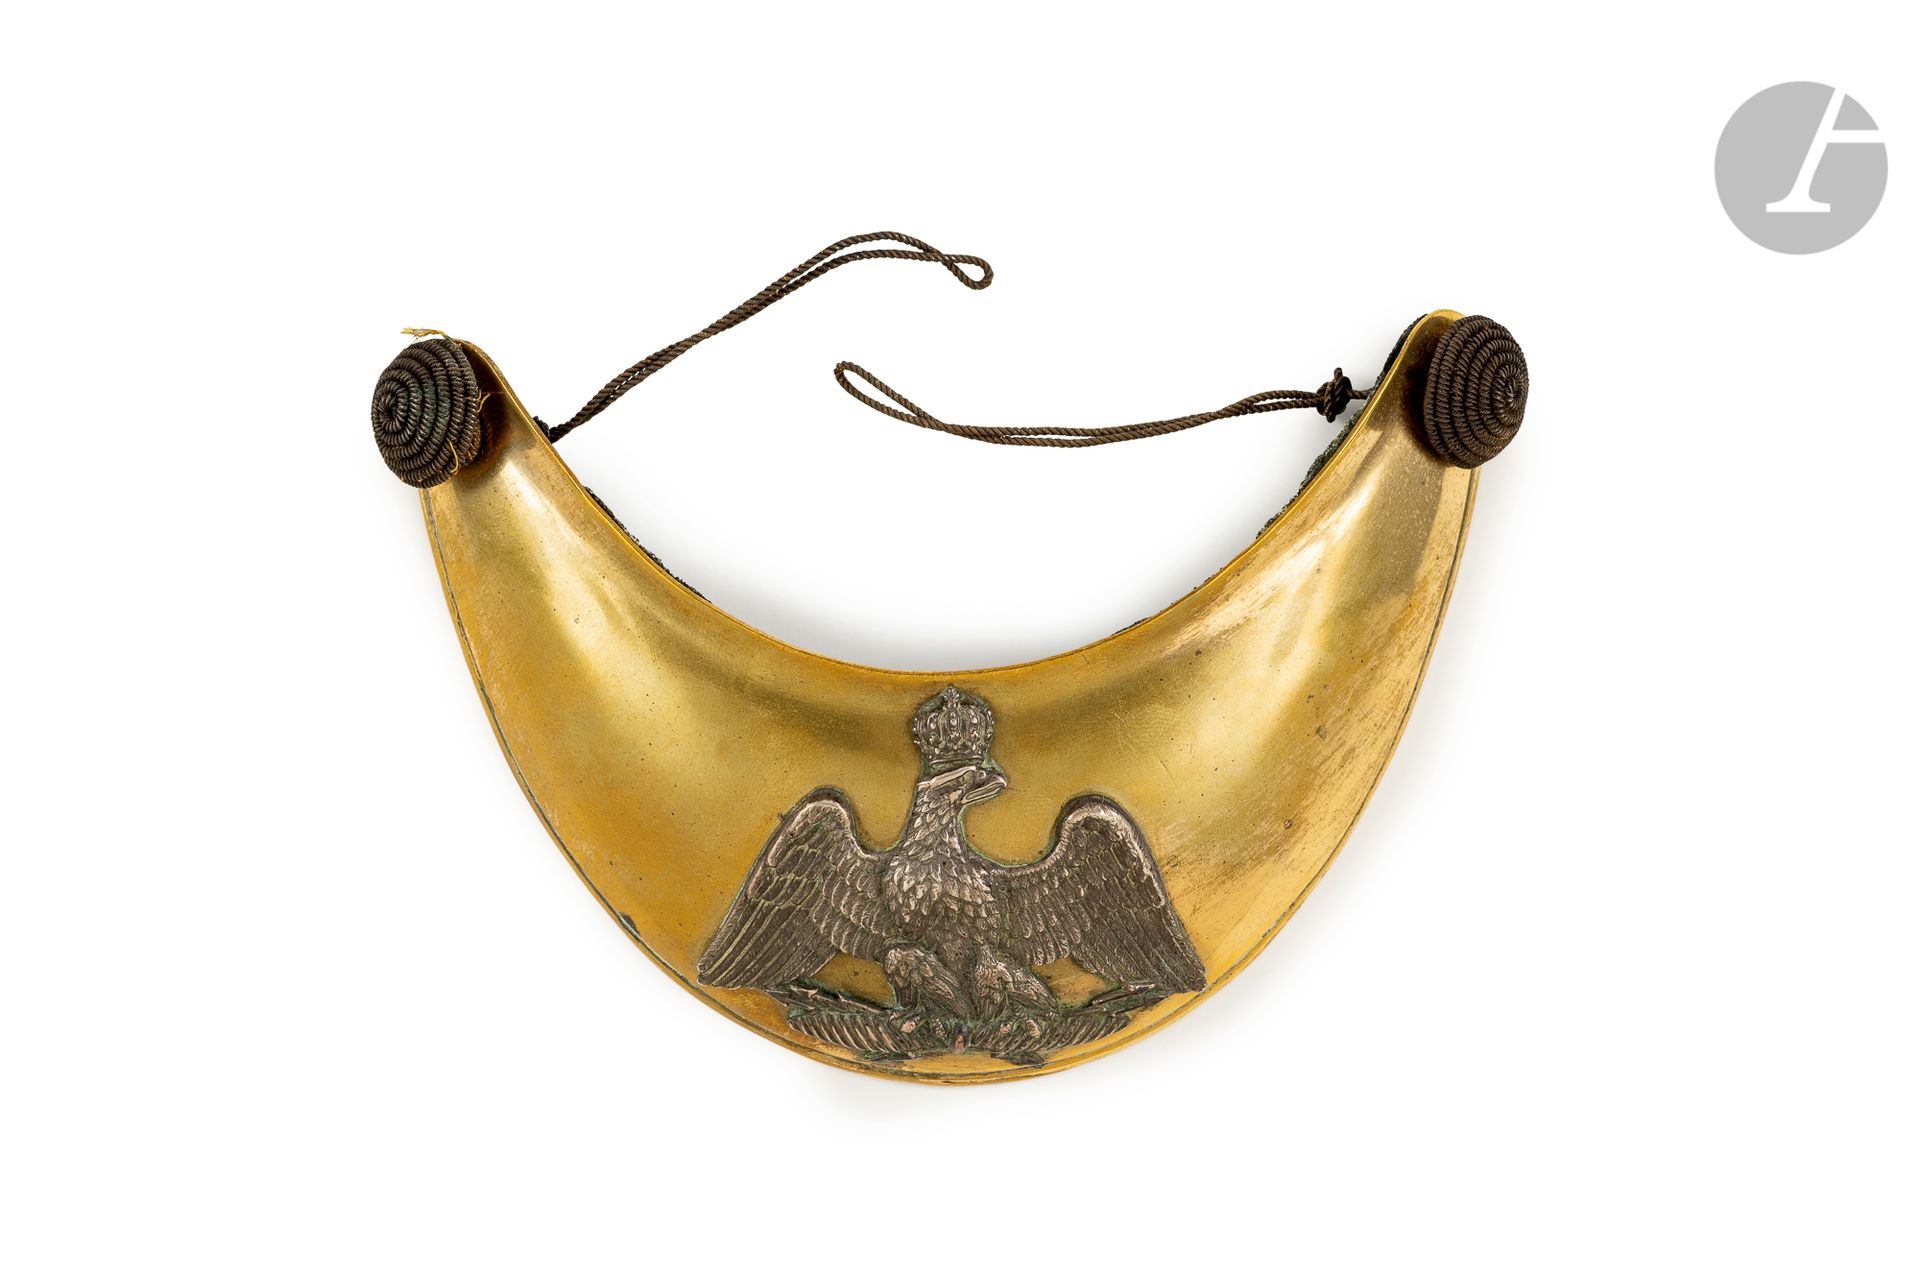 Null 军官的铜质衣领挂件。
银鹰设计。有了它的两个按钮。
公元前，第二帝国时期。